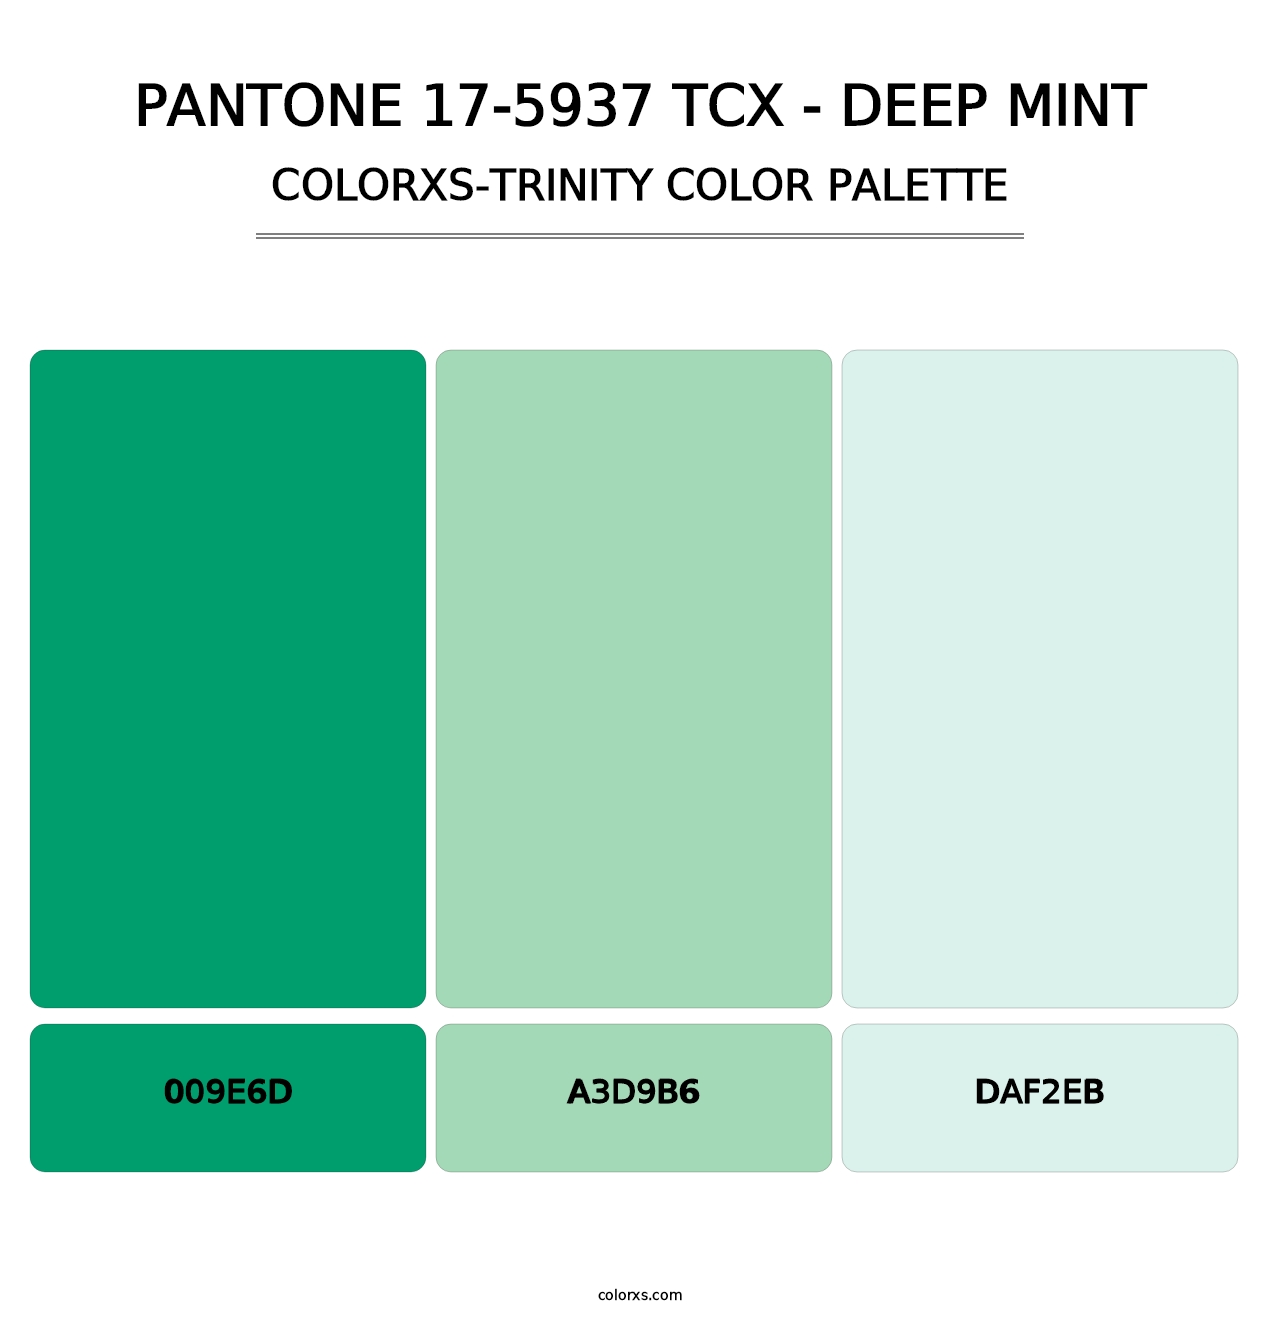 PANTONE 17-5937 TCX - Deep Mint - Colorxs Trinity Palette